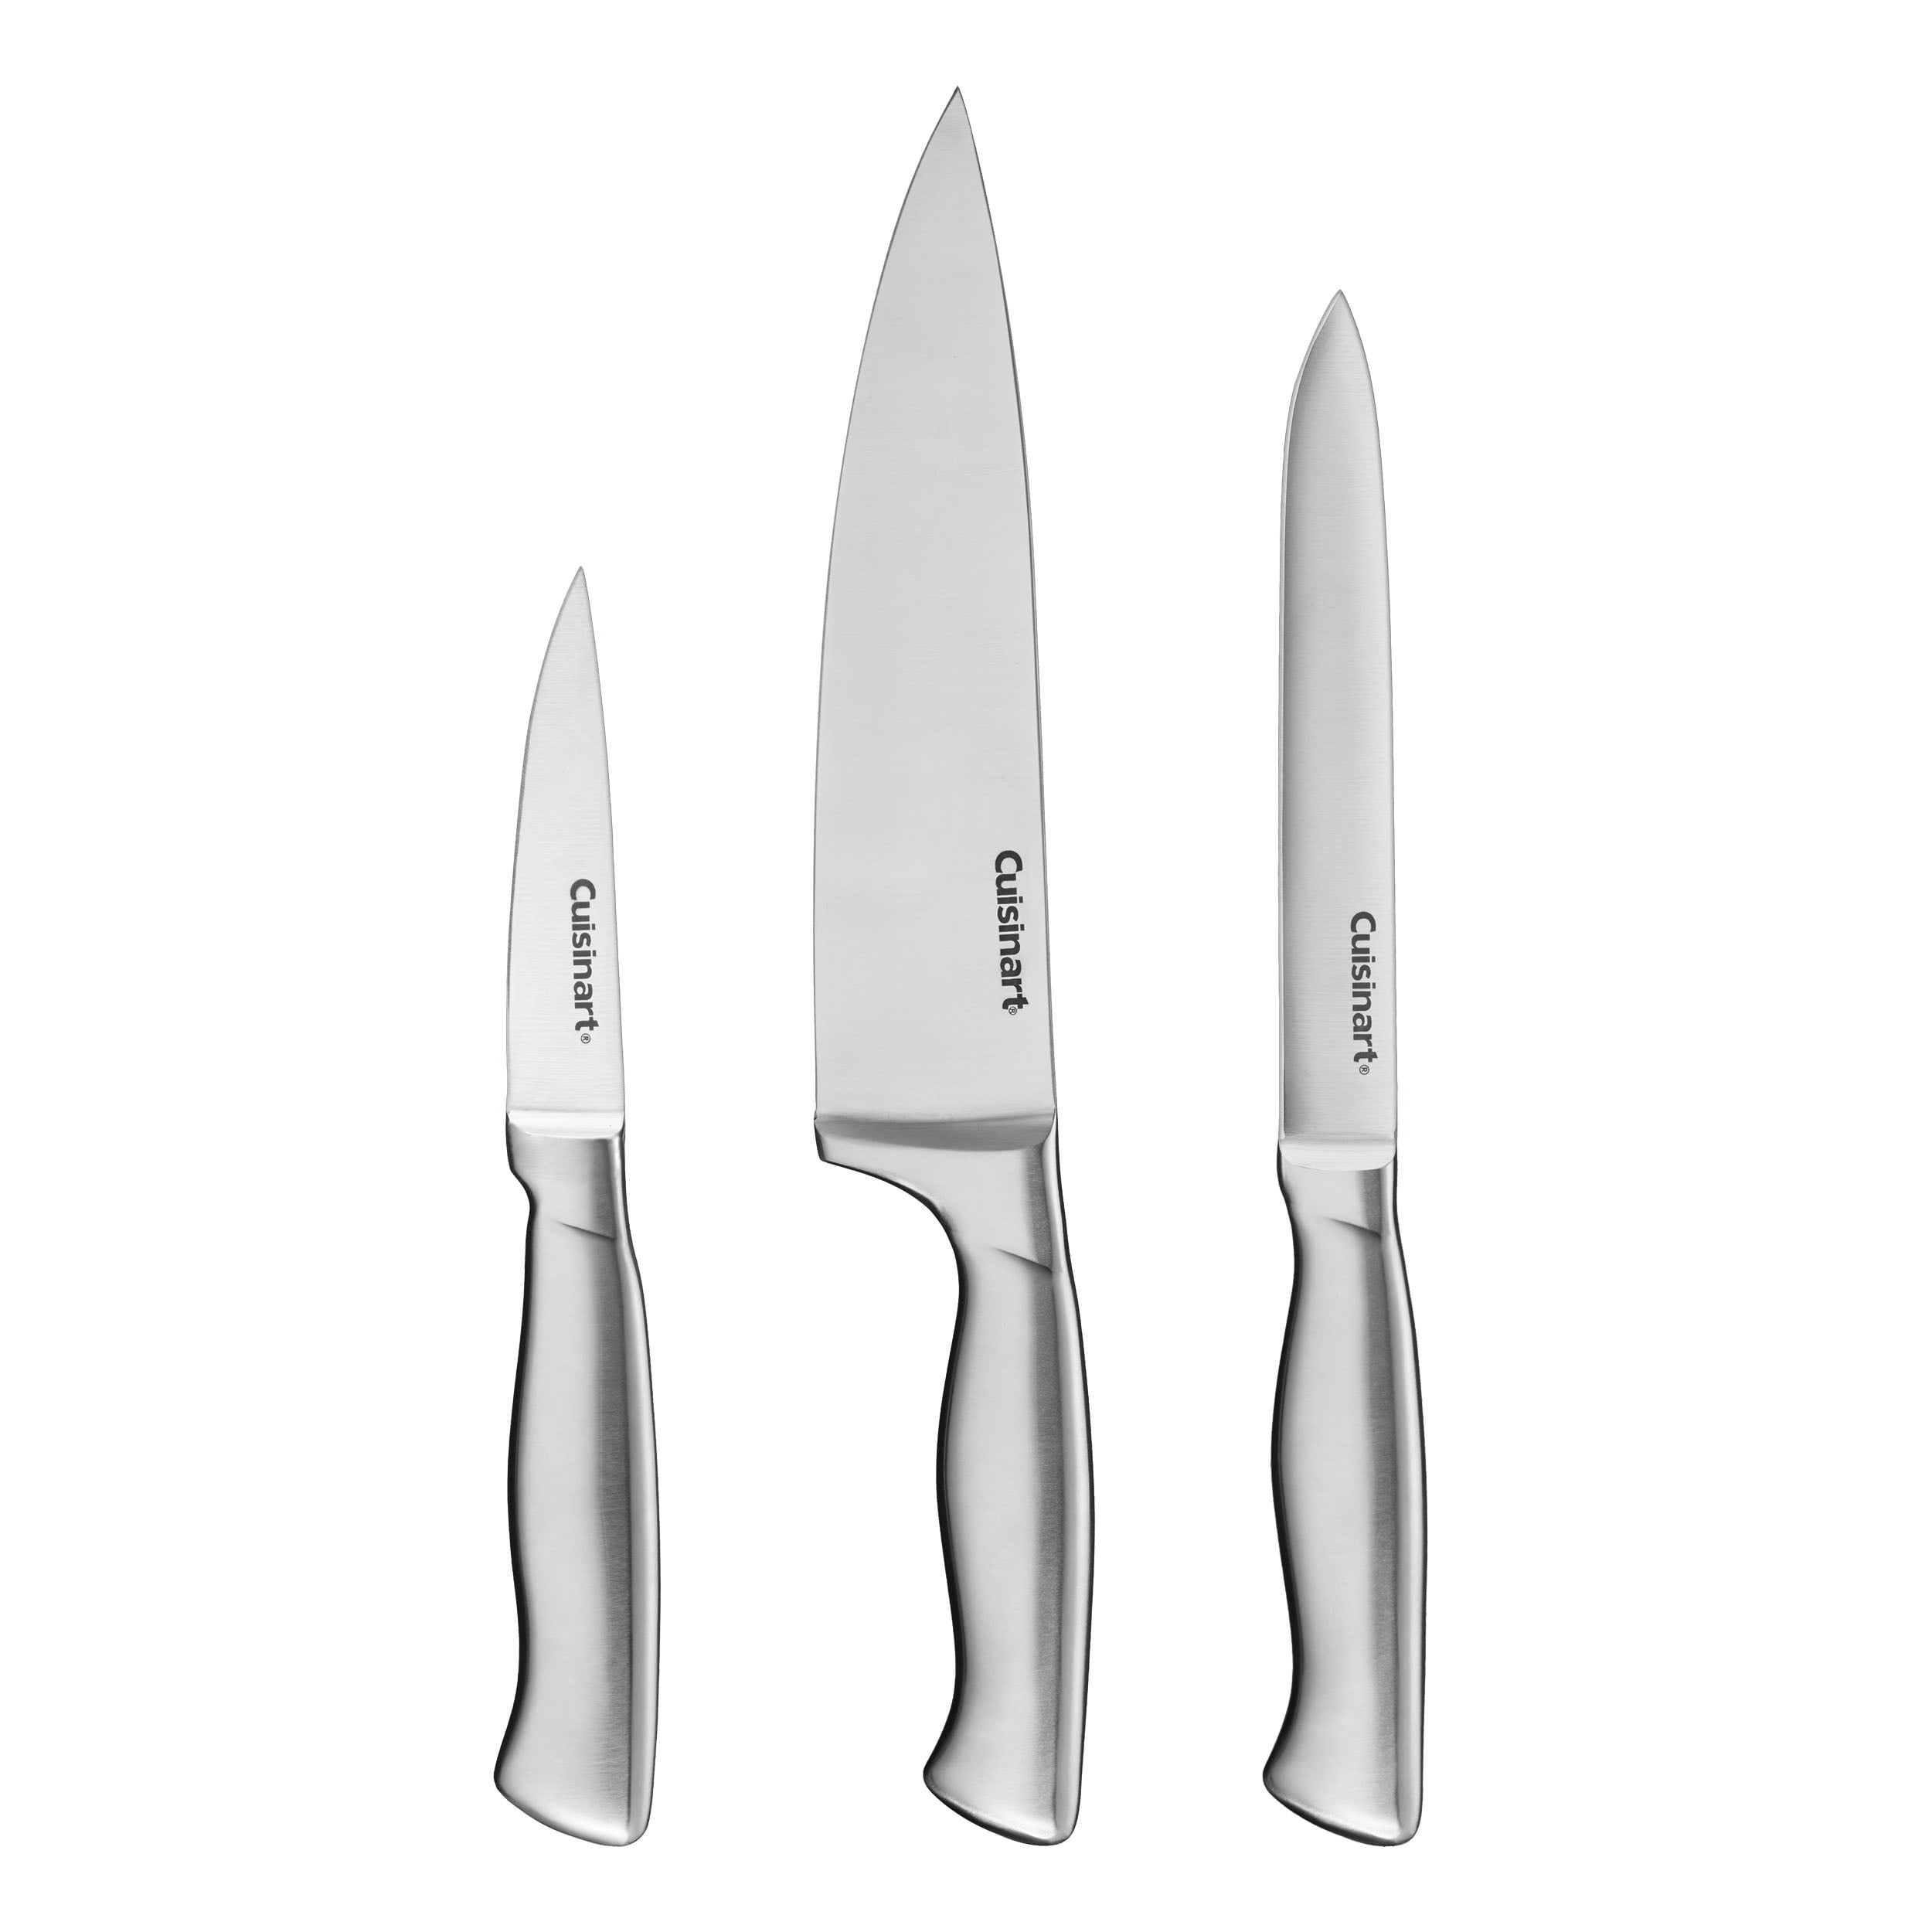 Cuisinart Stainless Steel: 4-Piece Steak Knife Set, C77ss-4sk3